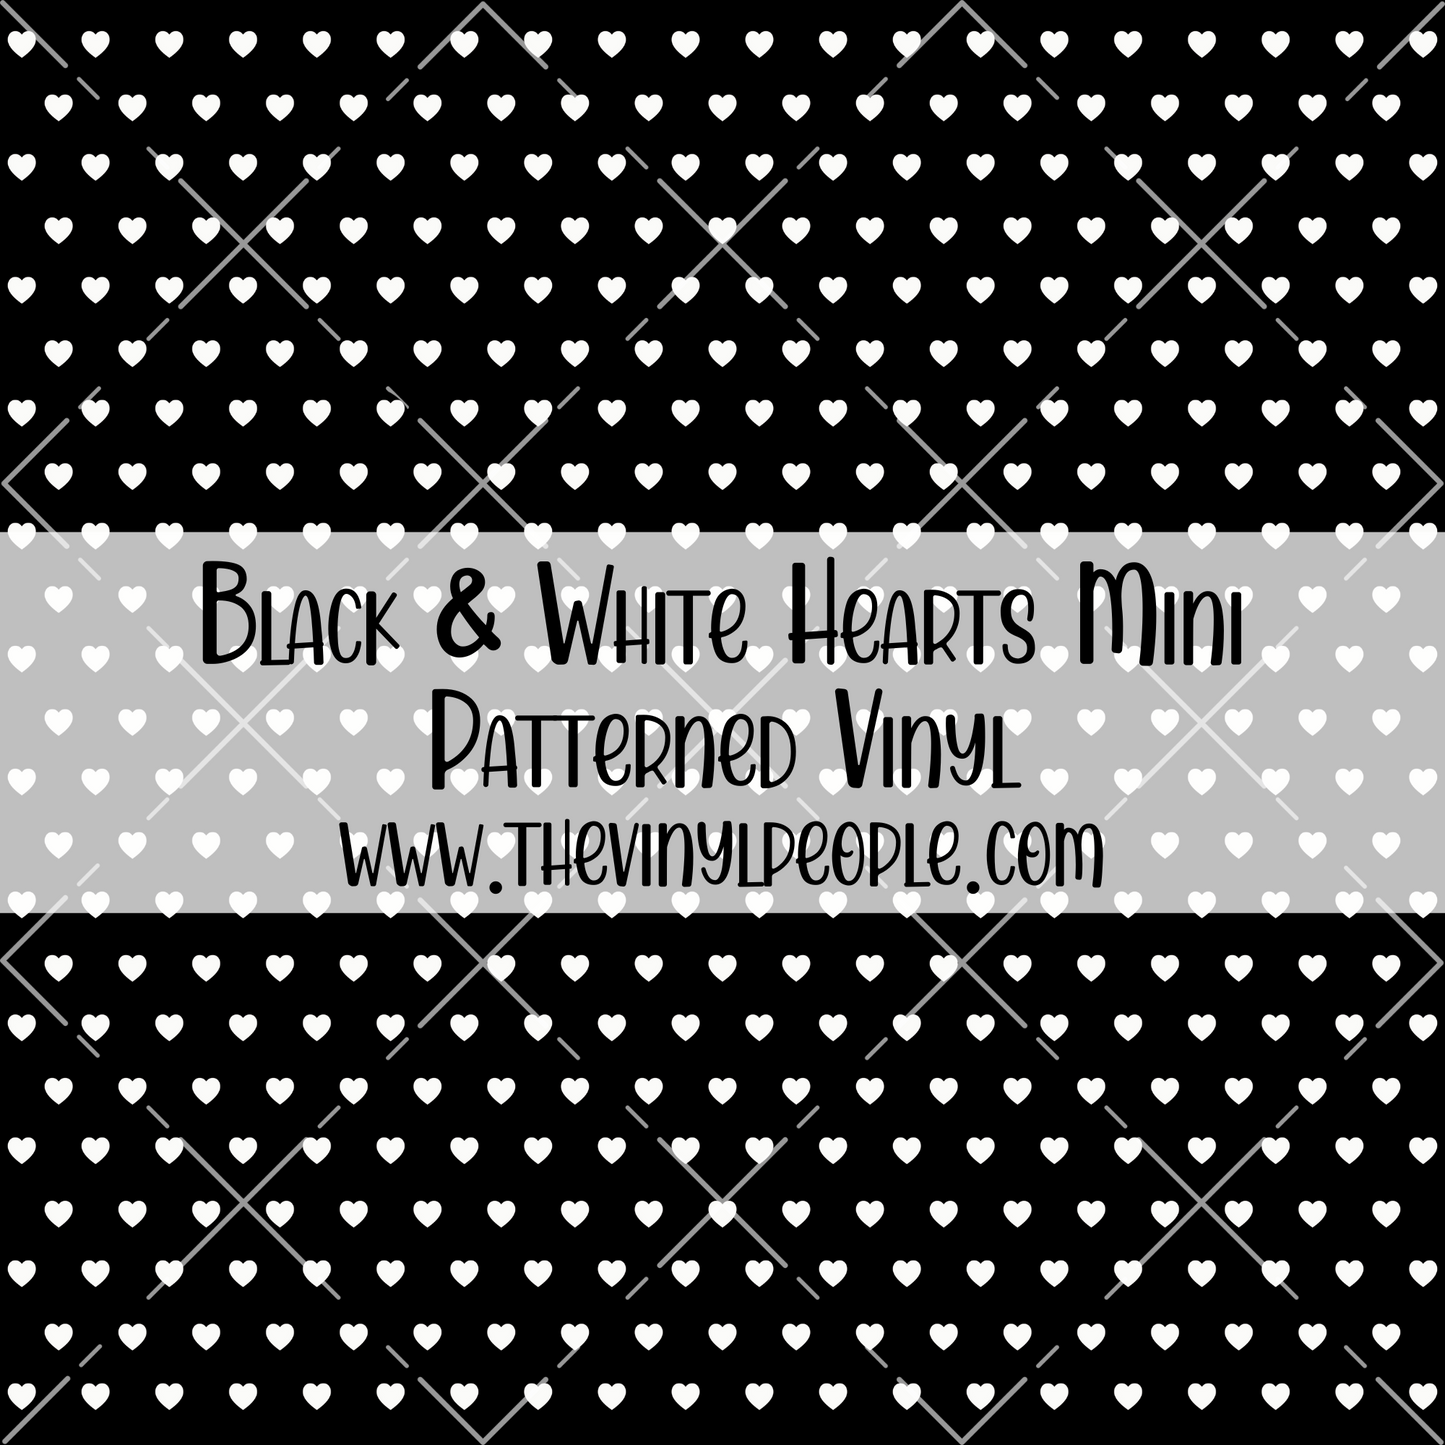 Black & White Hearts Patterned Vinyl